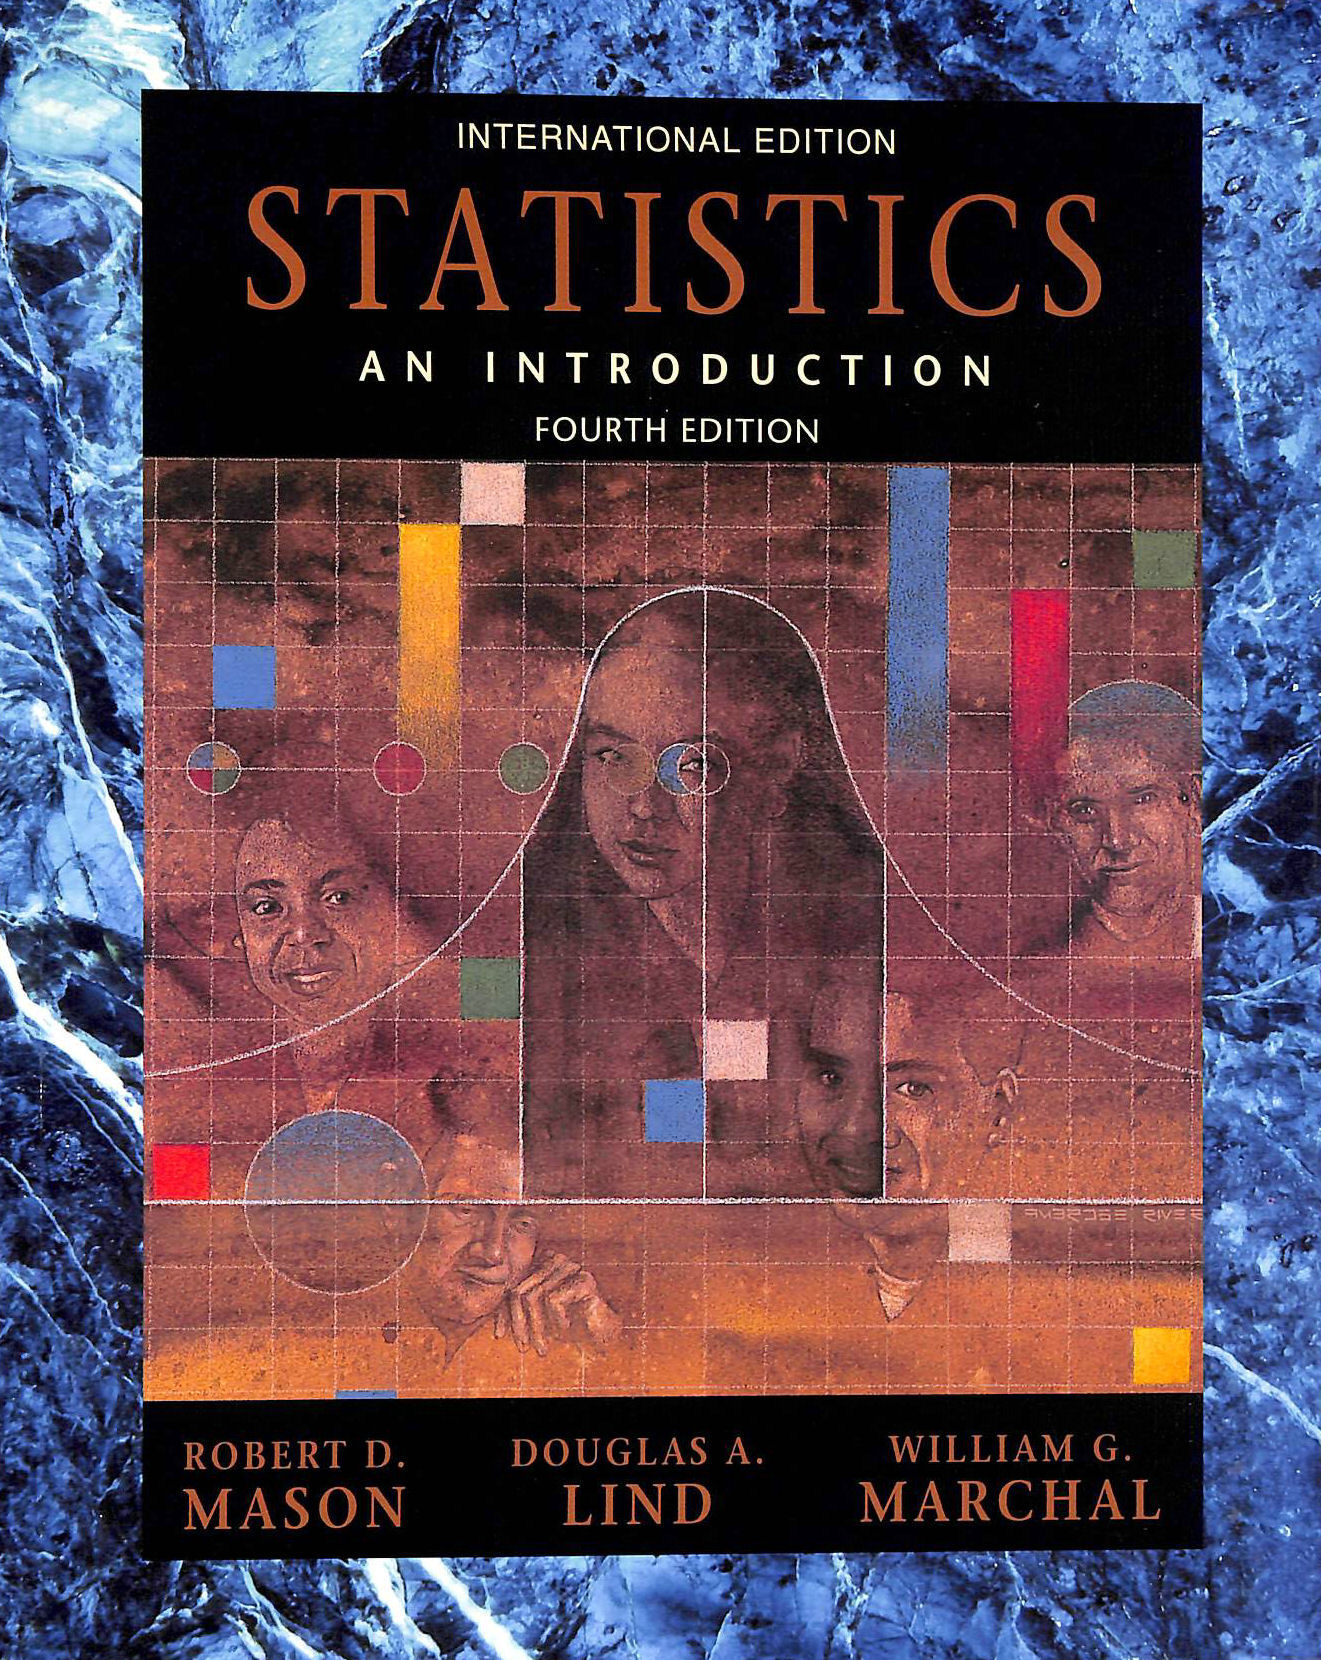 ROBERT D. MASON, DOUGLAS A. LIND, WILLIAM G. MARCHAL - Statistics: An Introduction